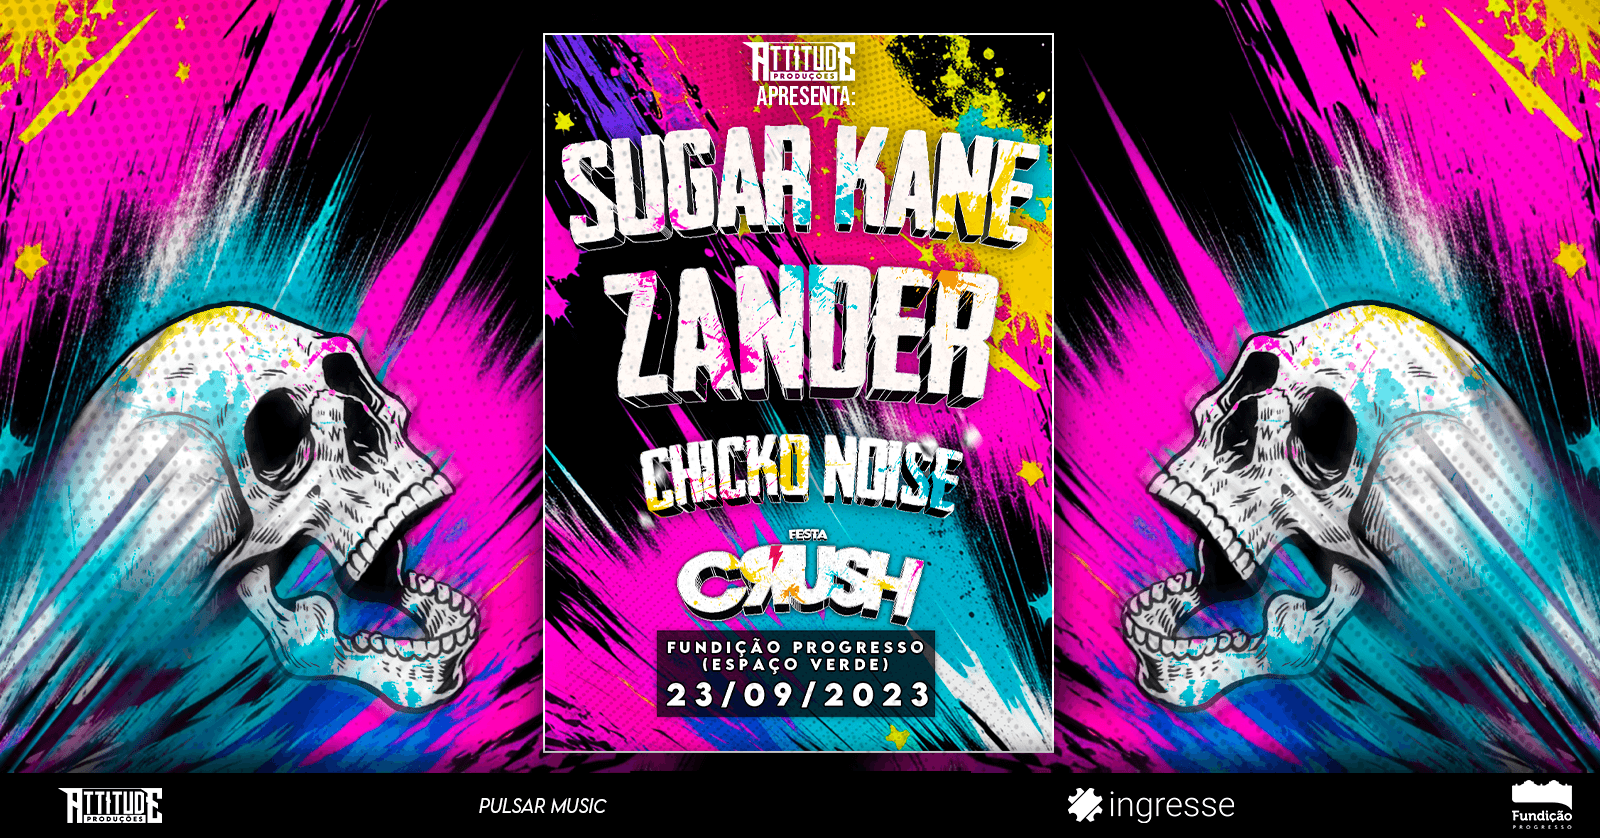 Sugar Kane, Zander, Chicko Noise, Festa Crush